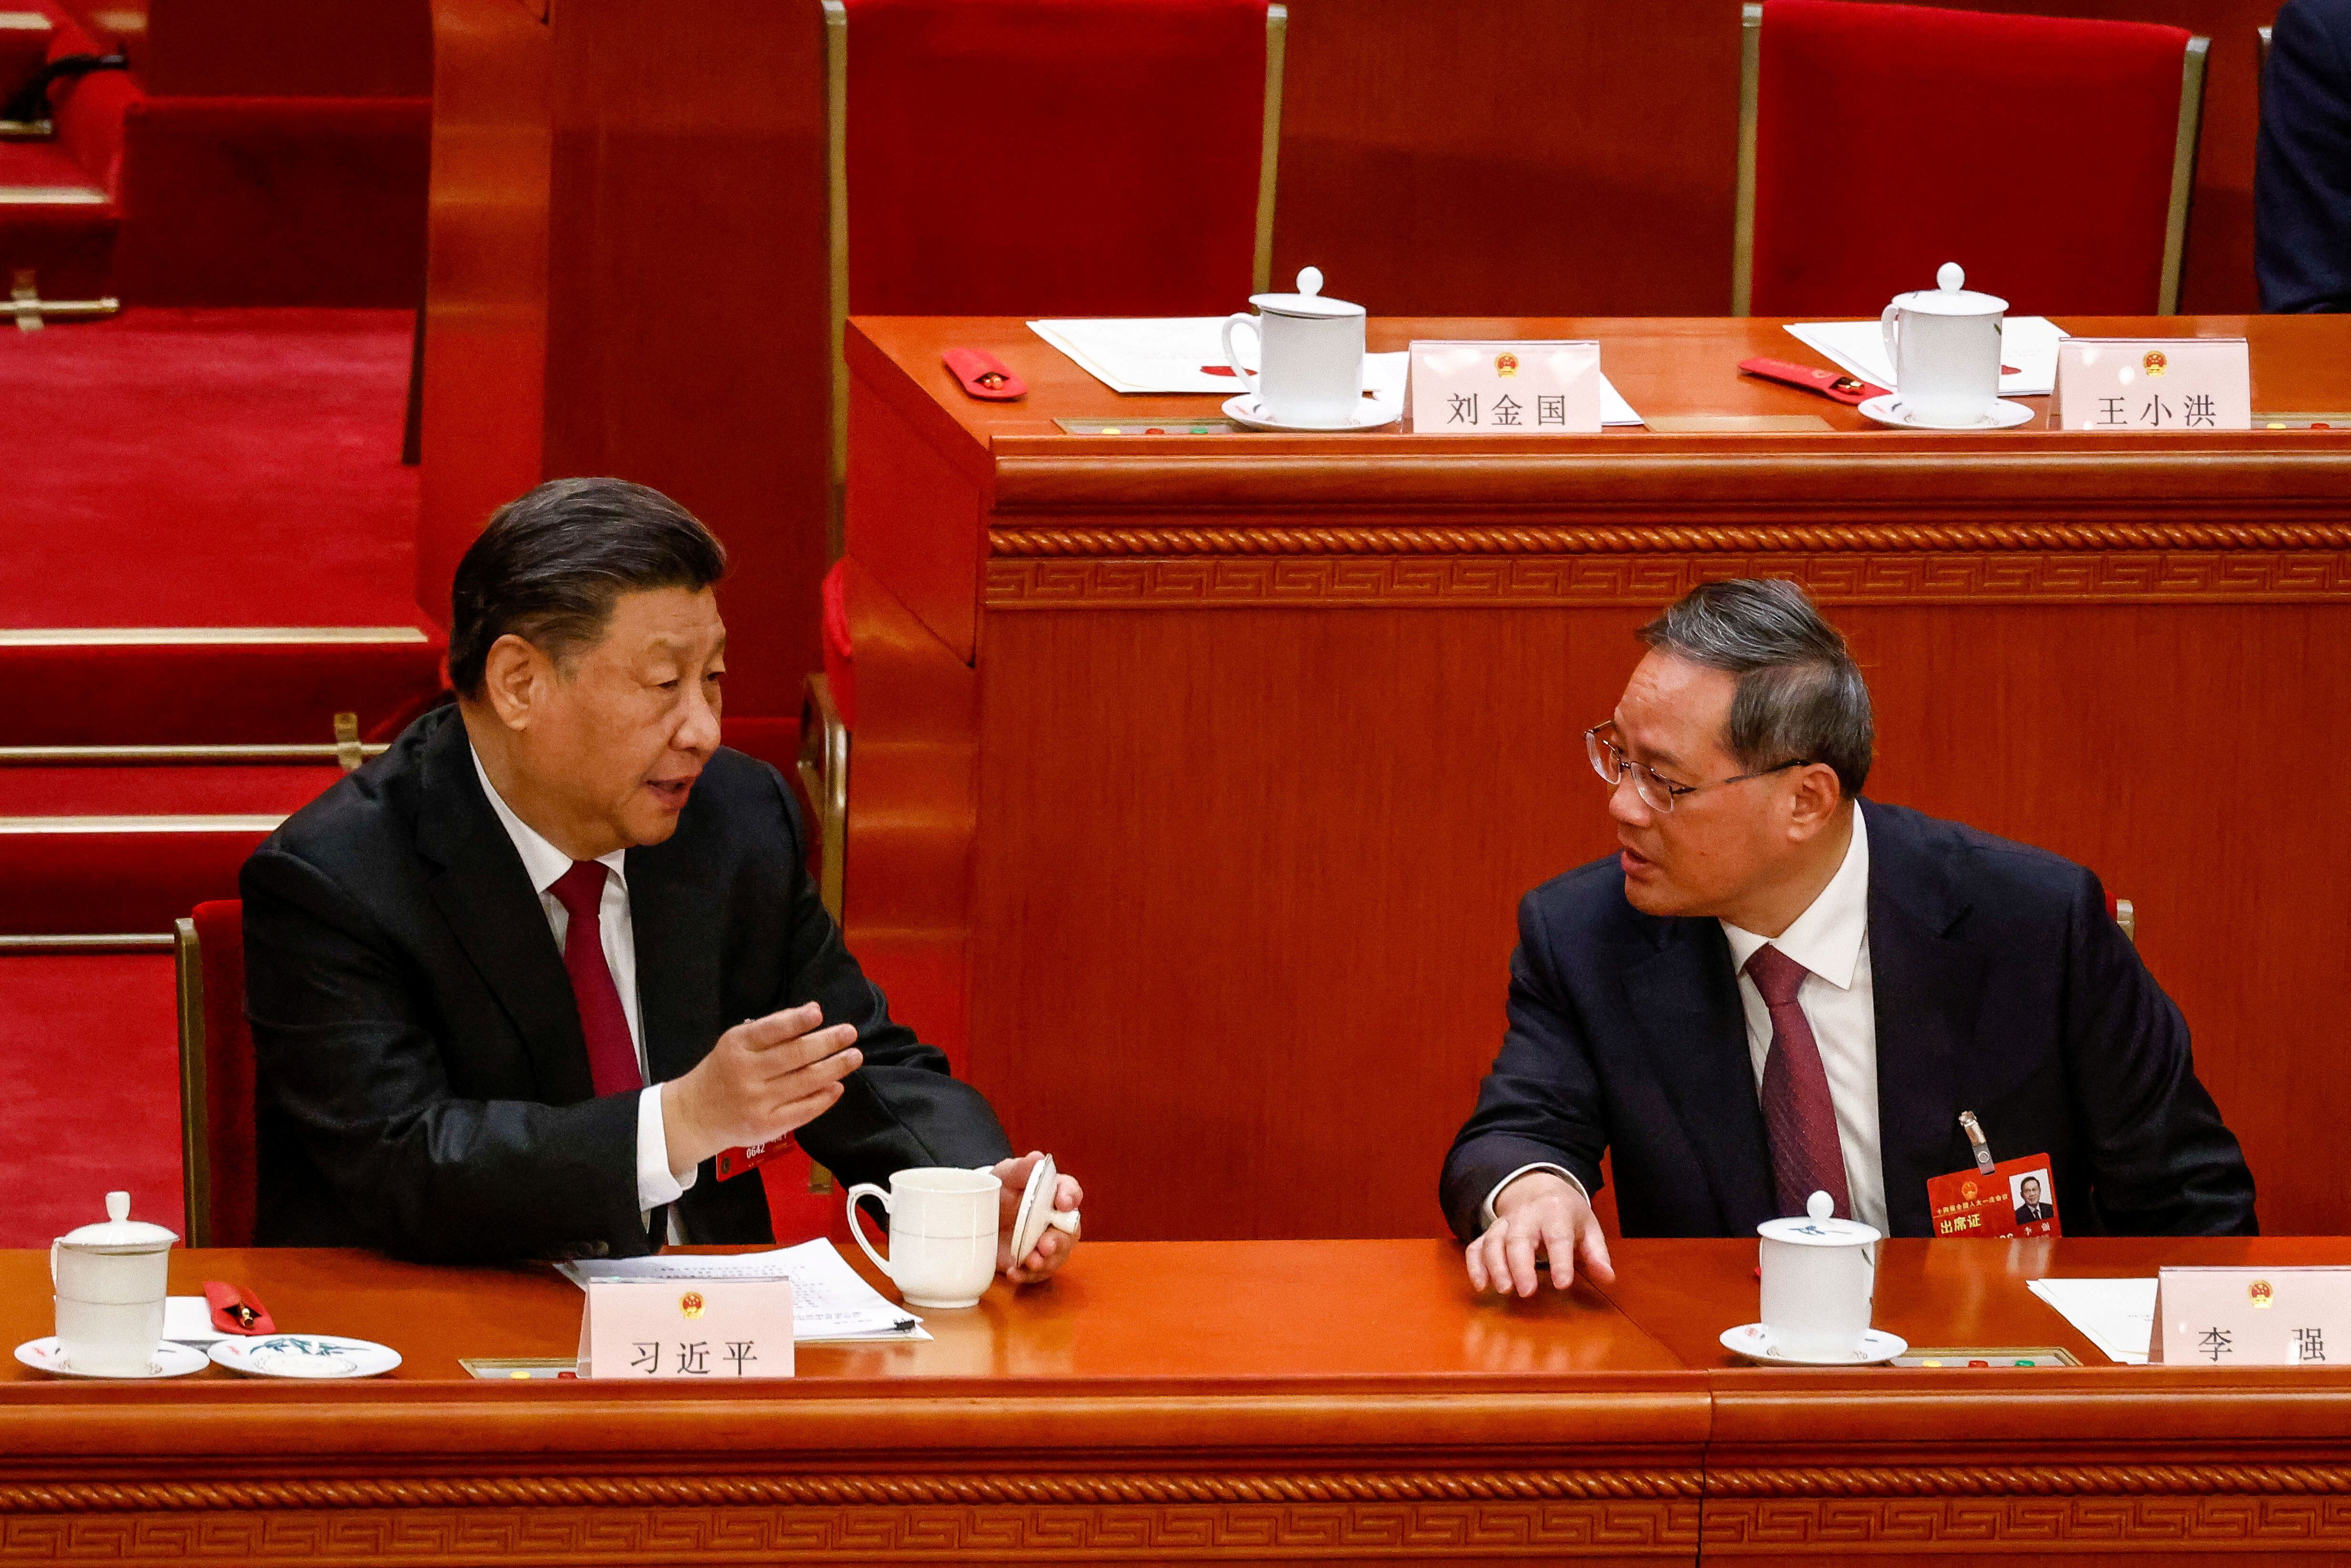 Xi Jinping habla al primer ministro Li Qiang durante la Tercera Sesión Plenaria de la Asamblea Popular Nacional (APN) en el Gran Salón del Pueblo (MARK R. CRISTINO/REUTERS)